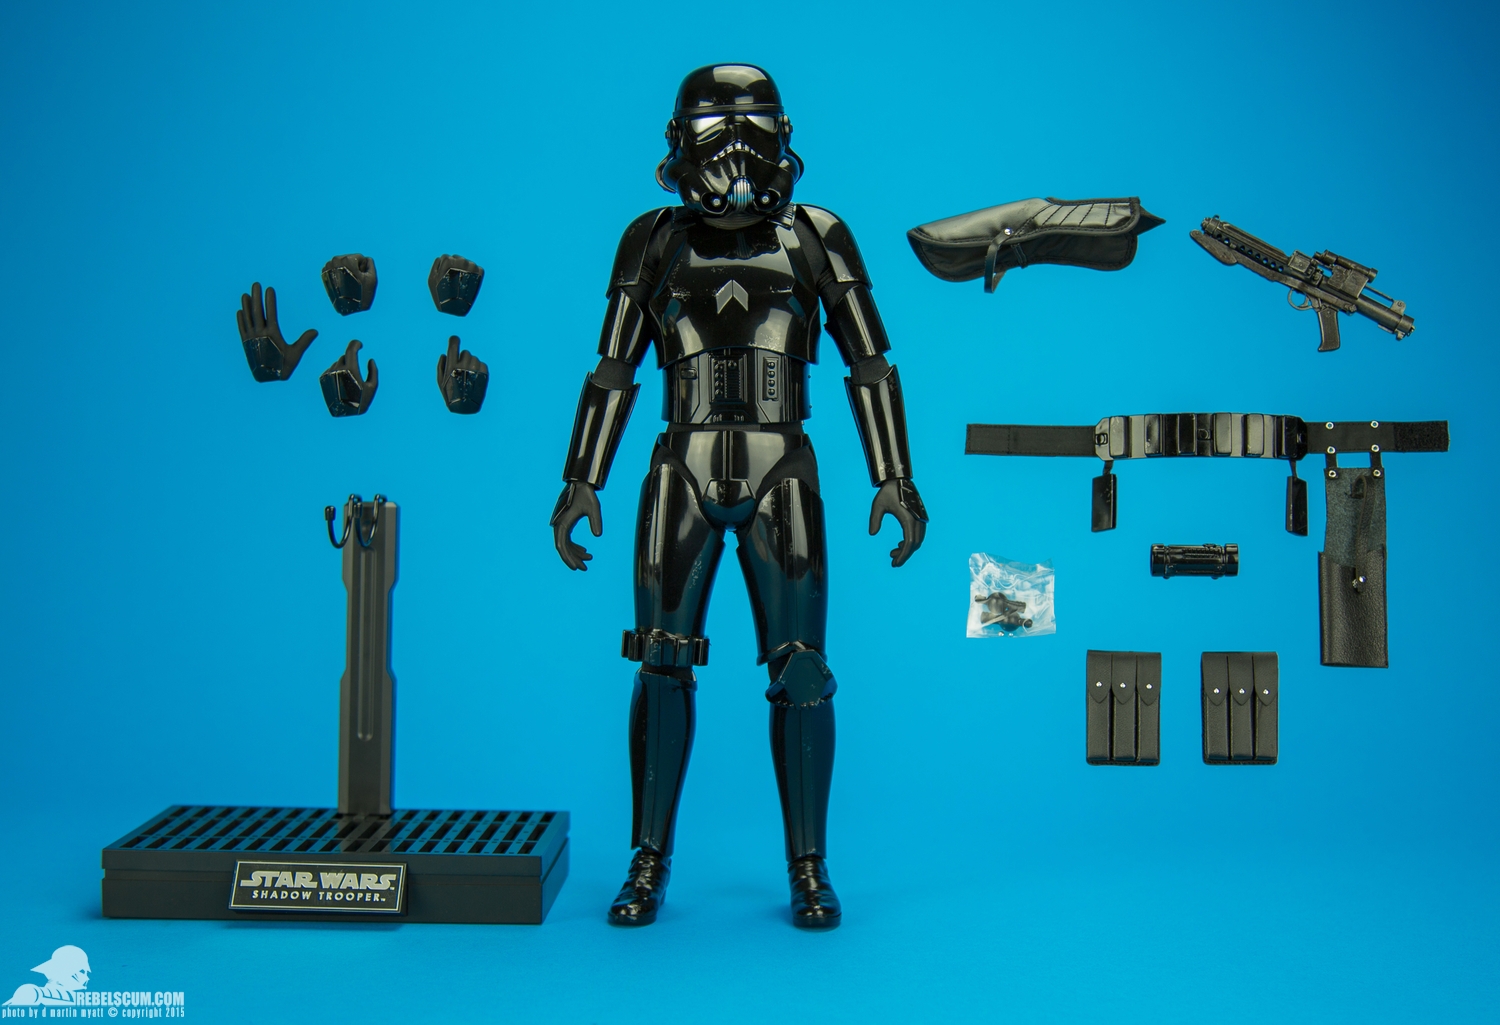 MMS271-Shadow-trooper-Hot-Toys-Star-Wars-figure-009.jpg